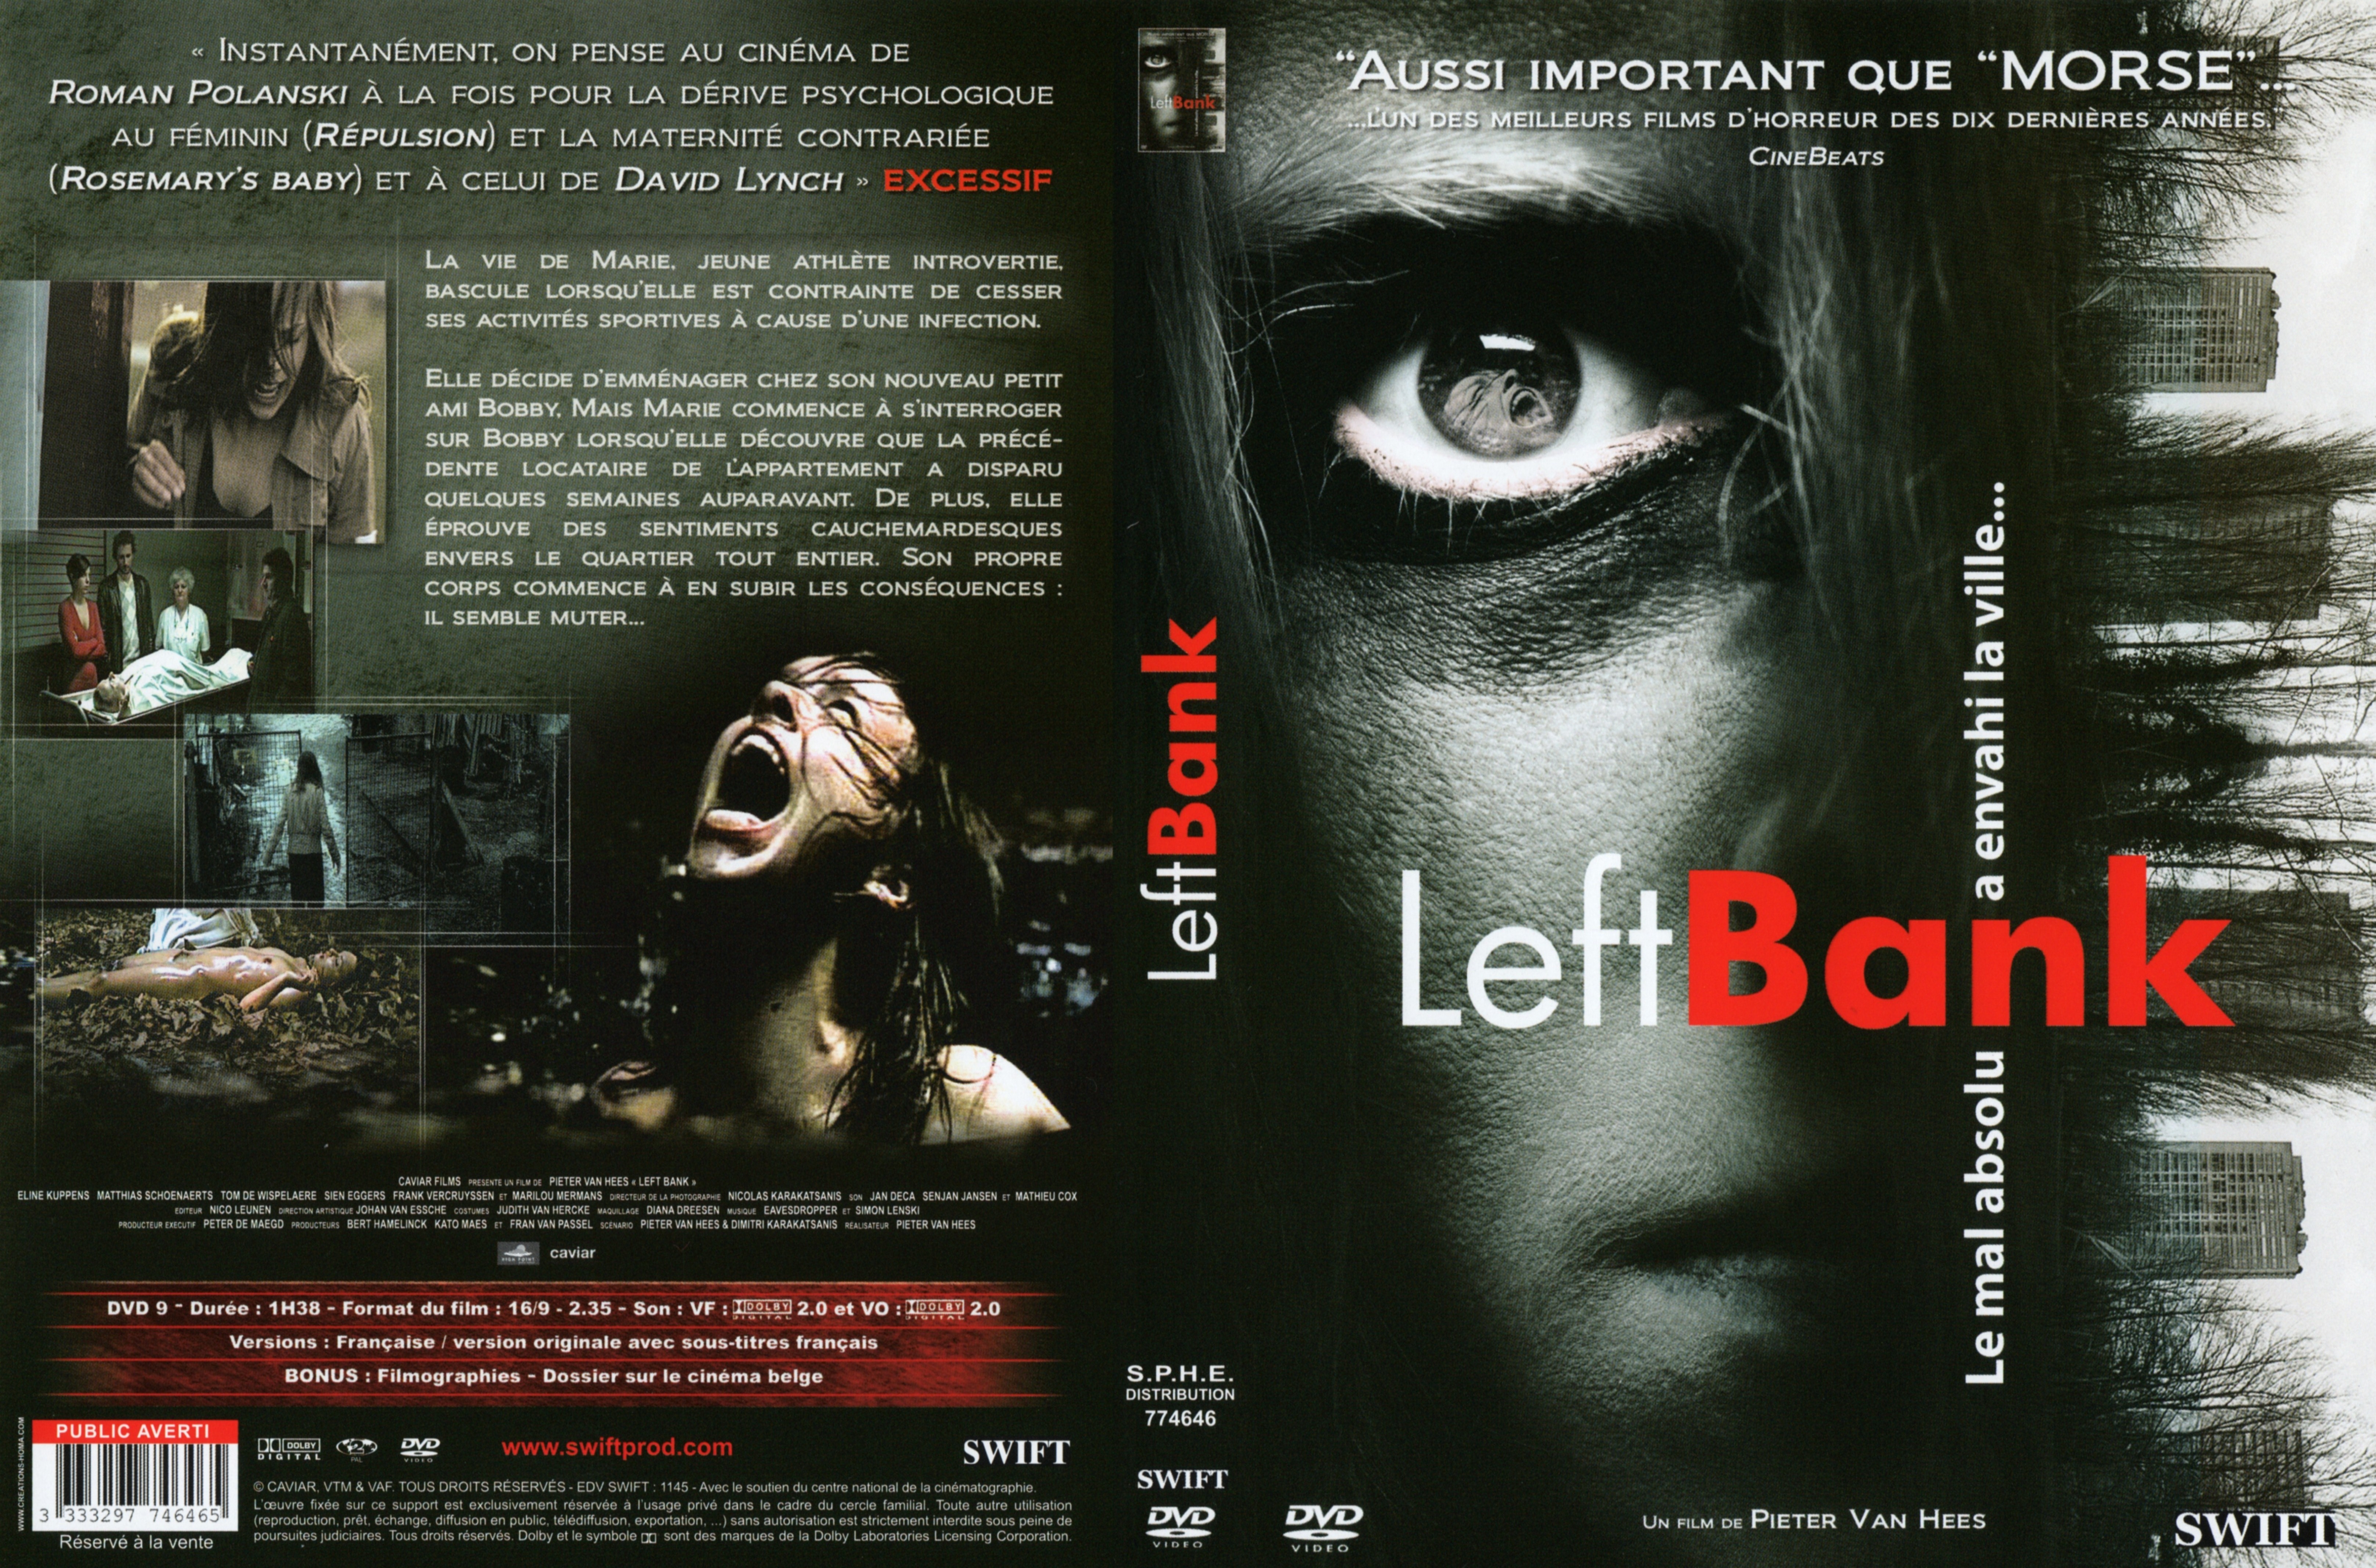 Jaquette DVD Left bank